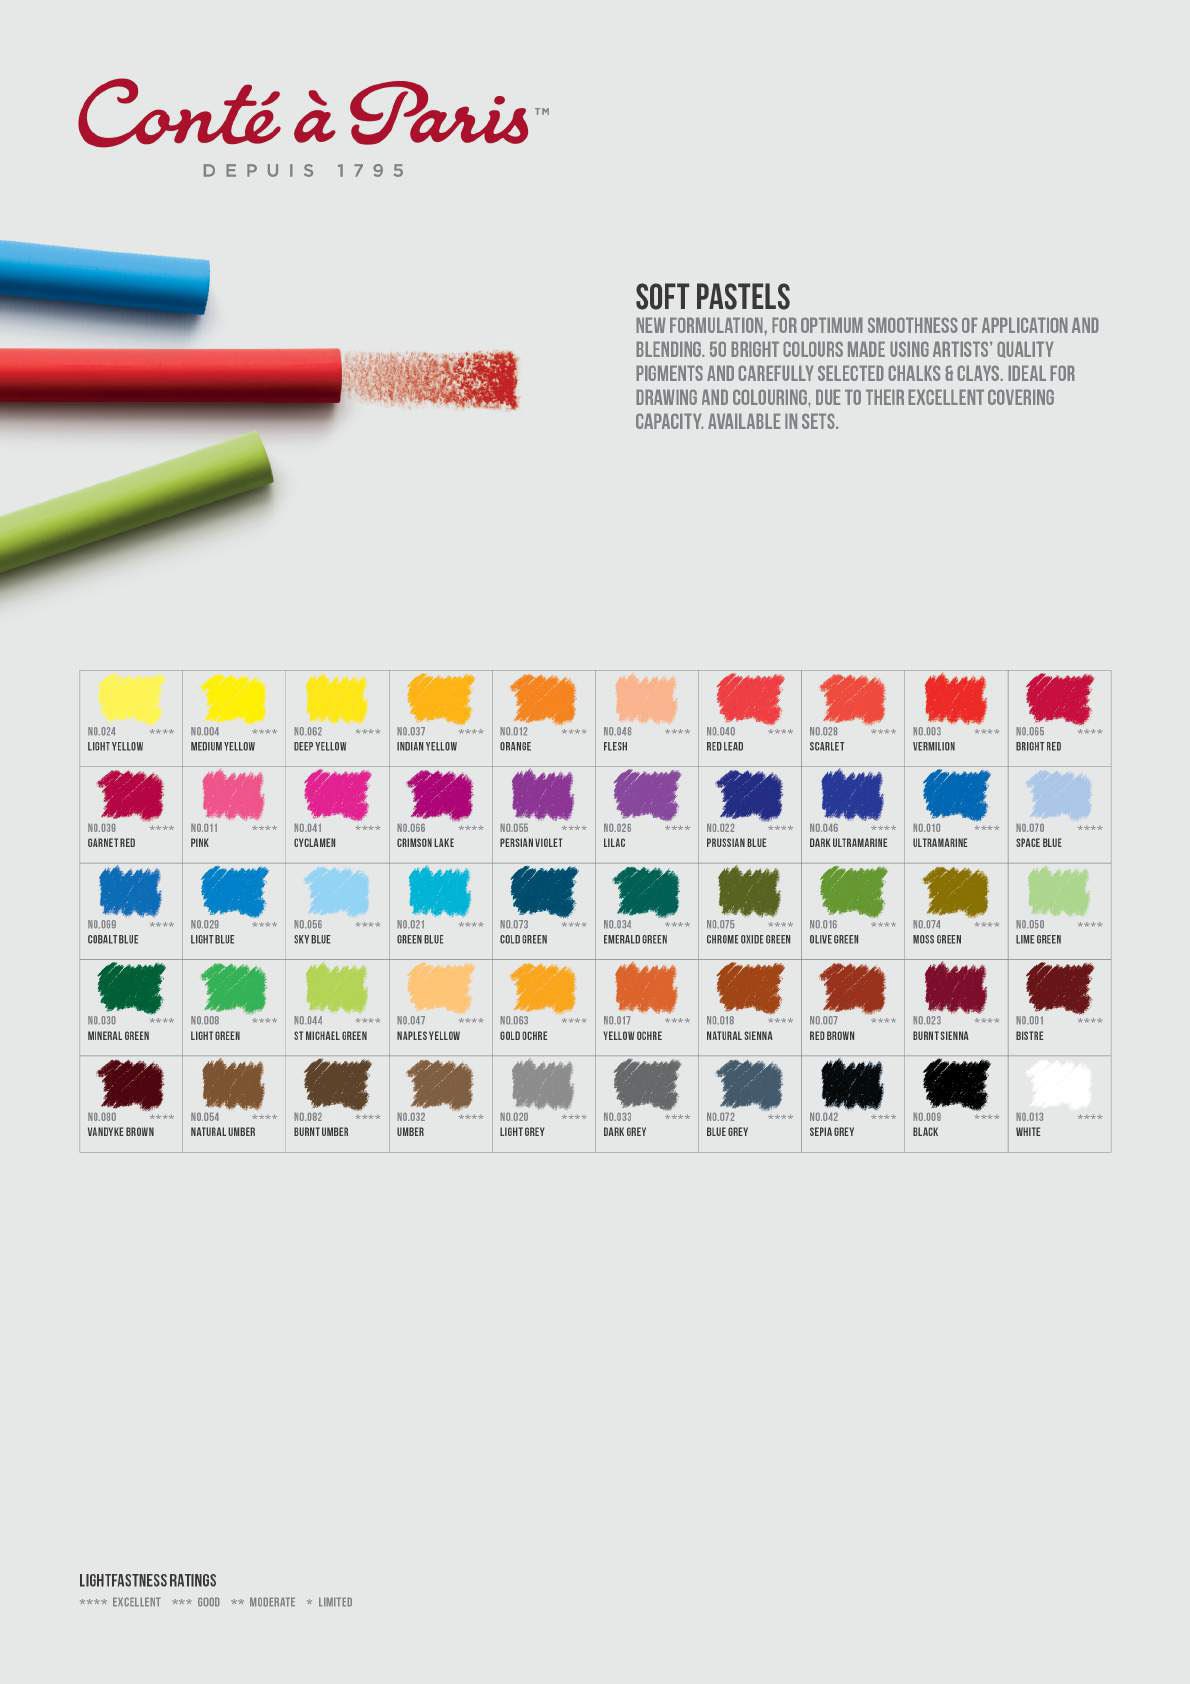 Mamut Pastels, Handmade Soft Pastel Set Nº10,.soft Pastels for Artists. 14  Selected Soft Pastel Colours. 